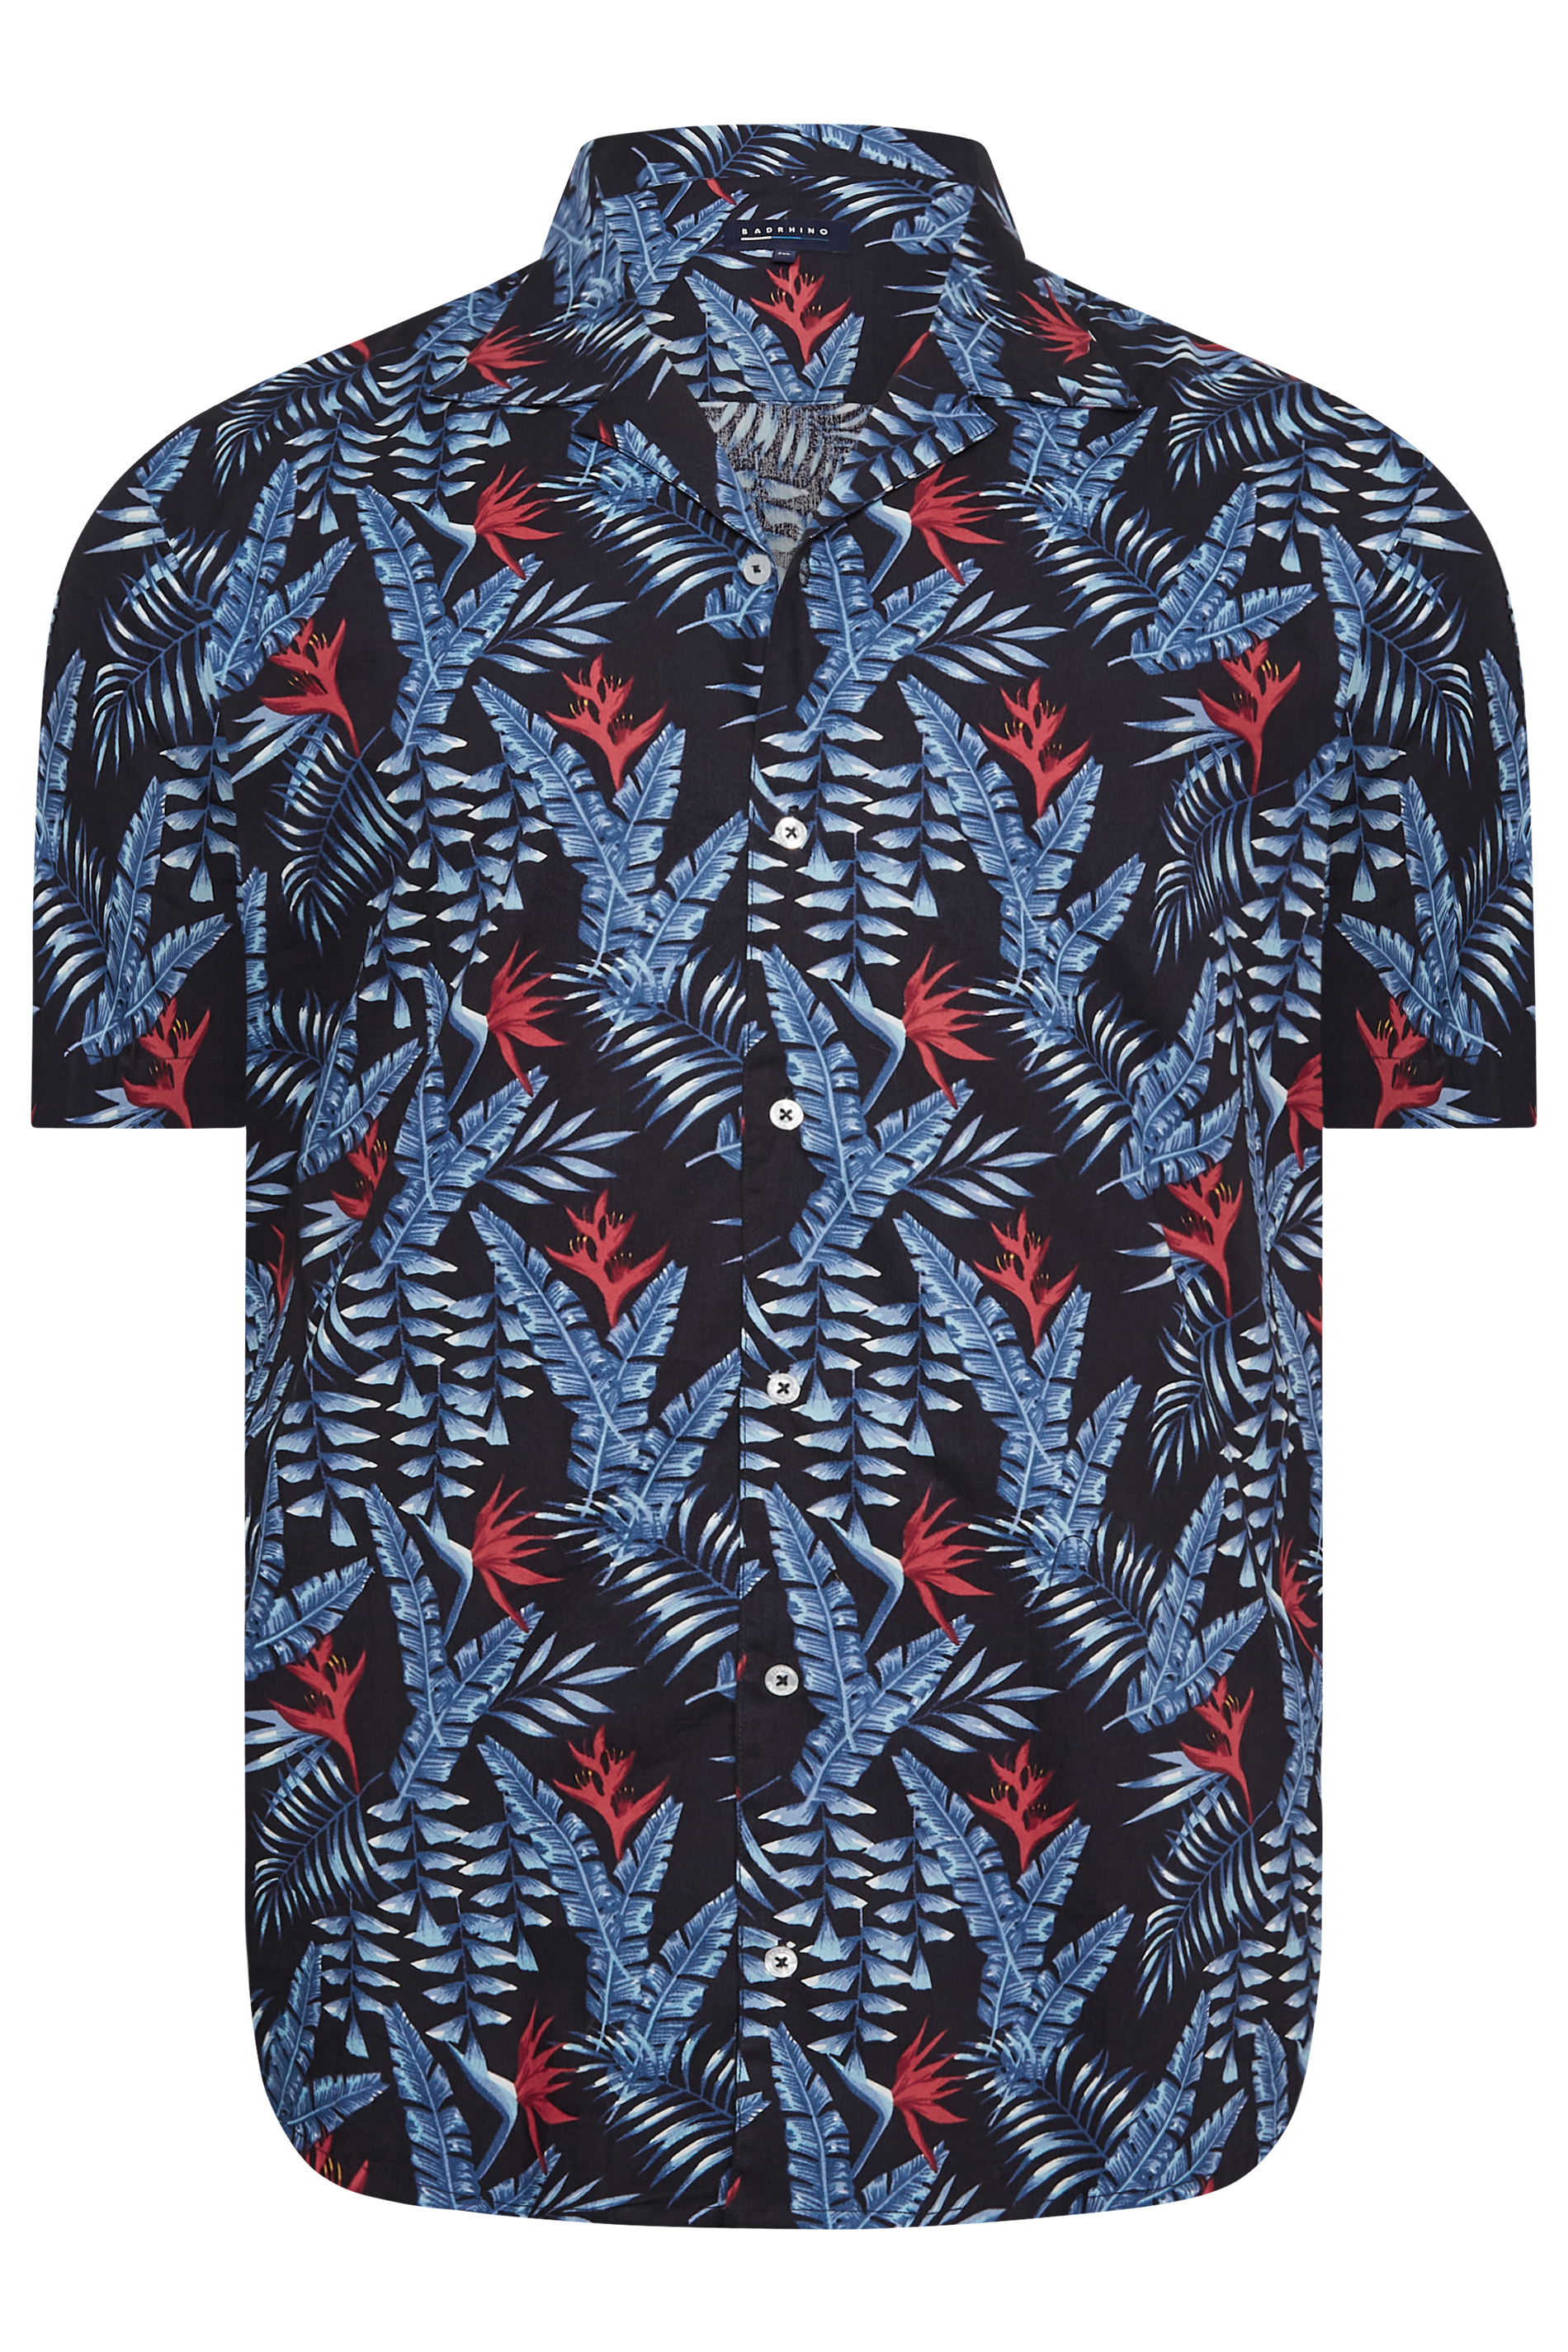 BadRhino Big & Tall Black Tropical Print Shirt | BadRhino 3